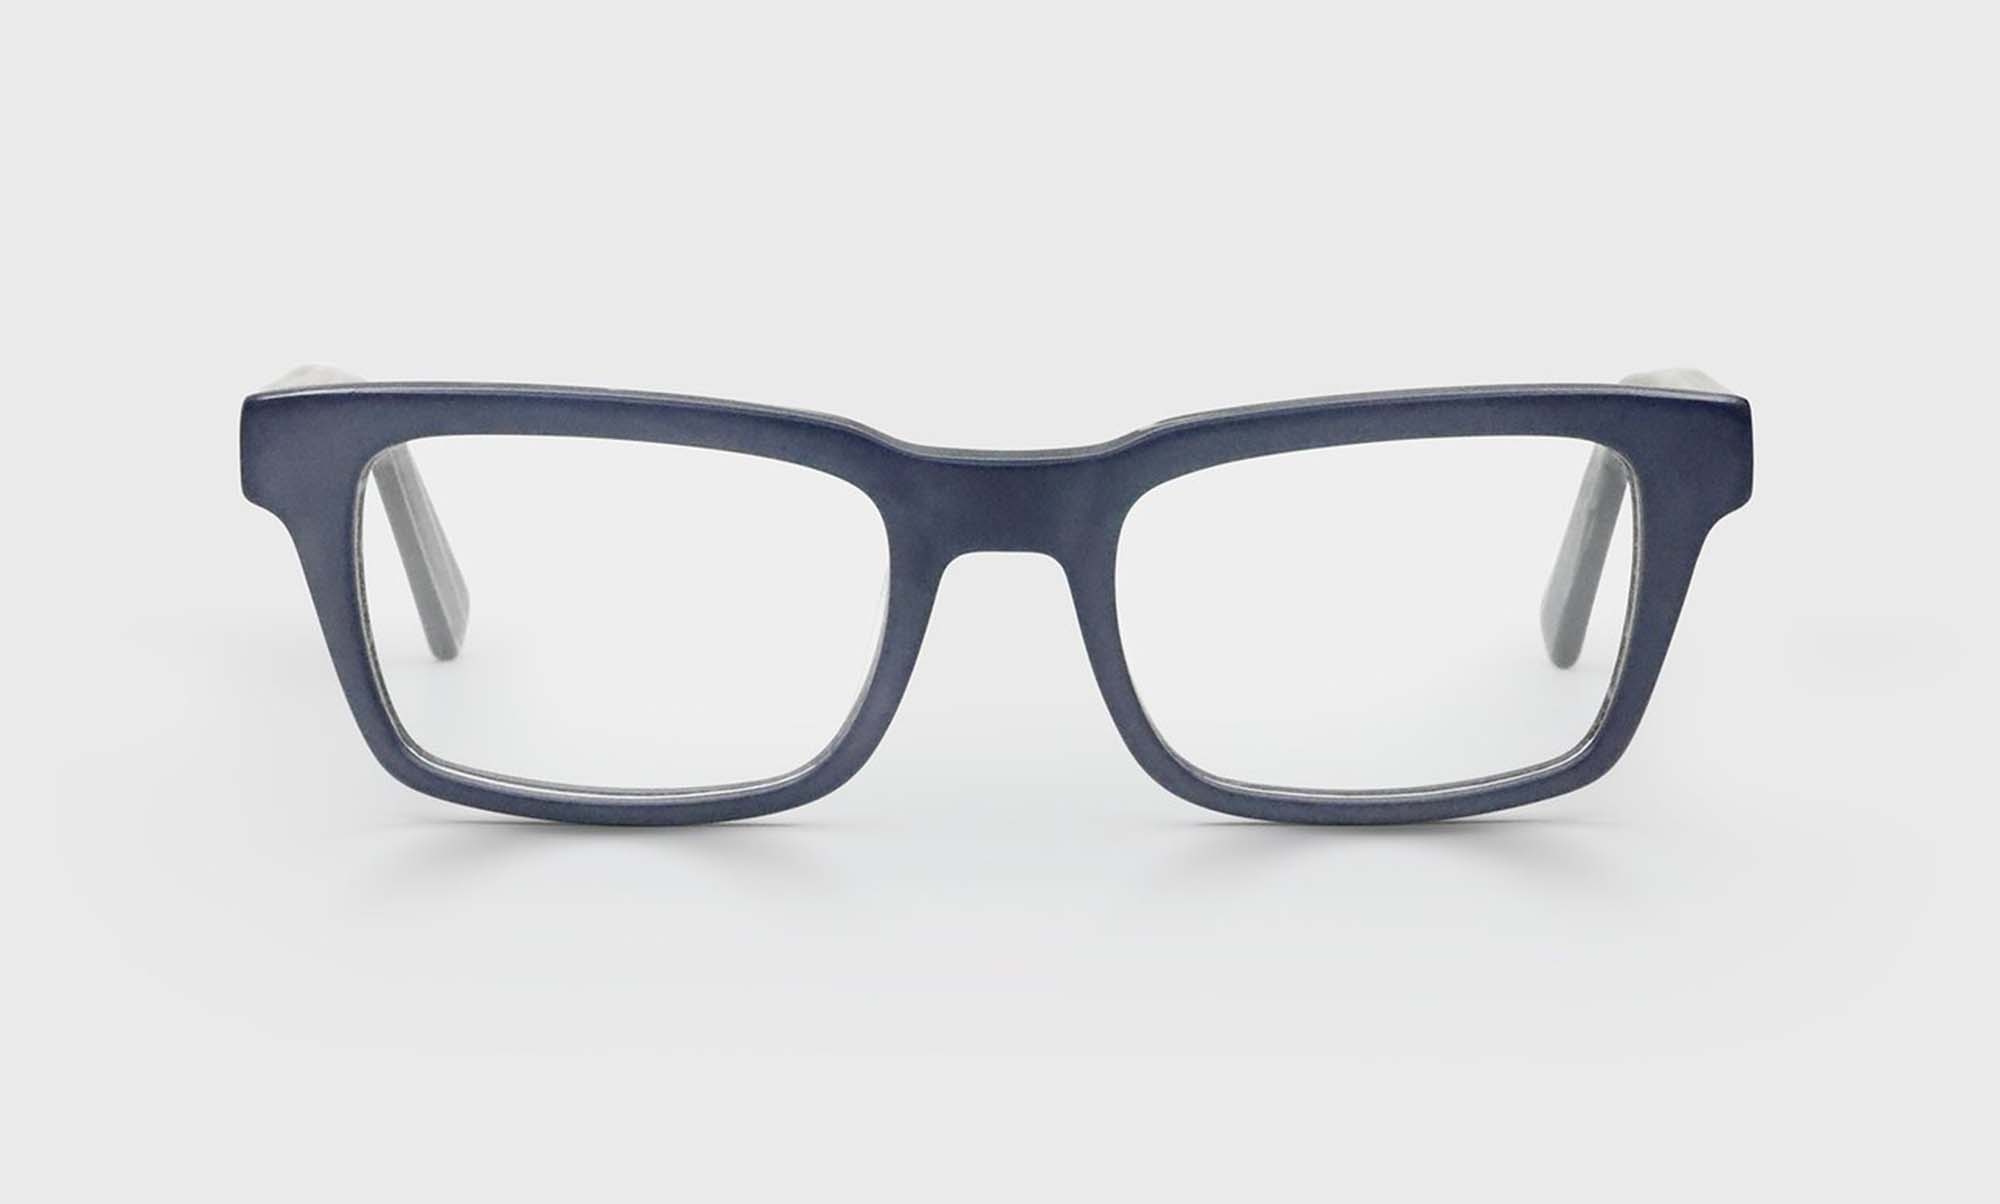 10_eyebobs premium designer fare n’ square readers, blue light and prescription glasses in dark blue